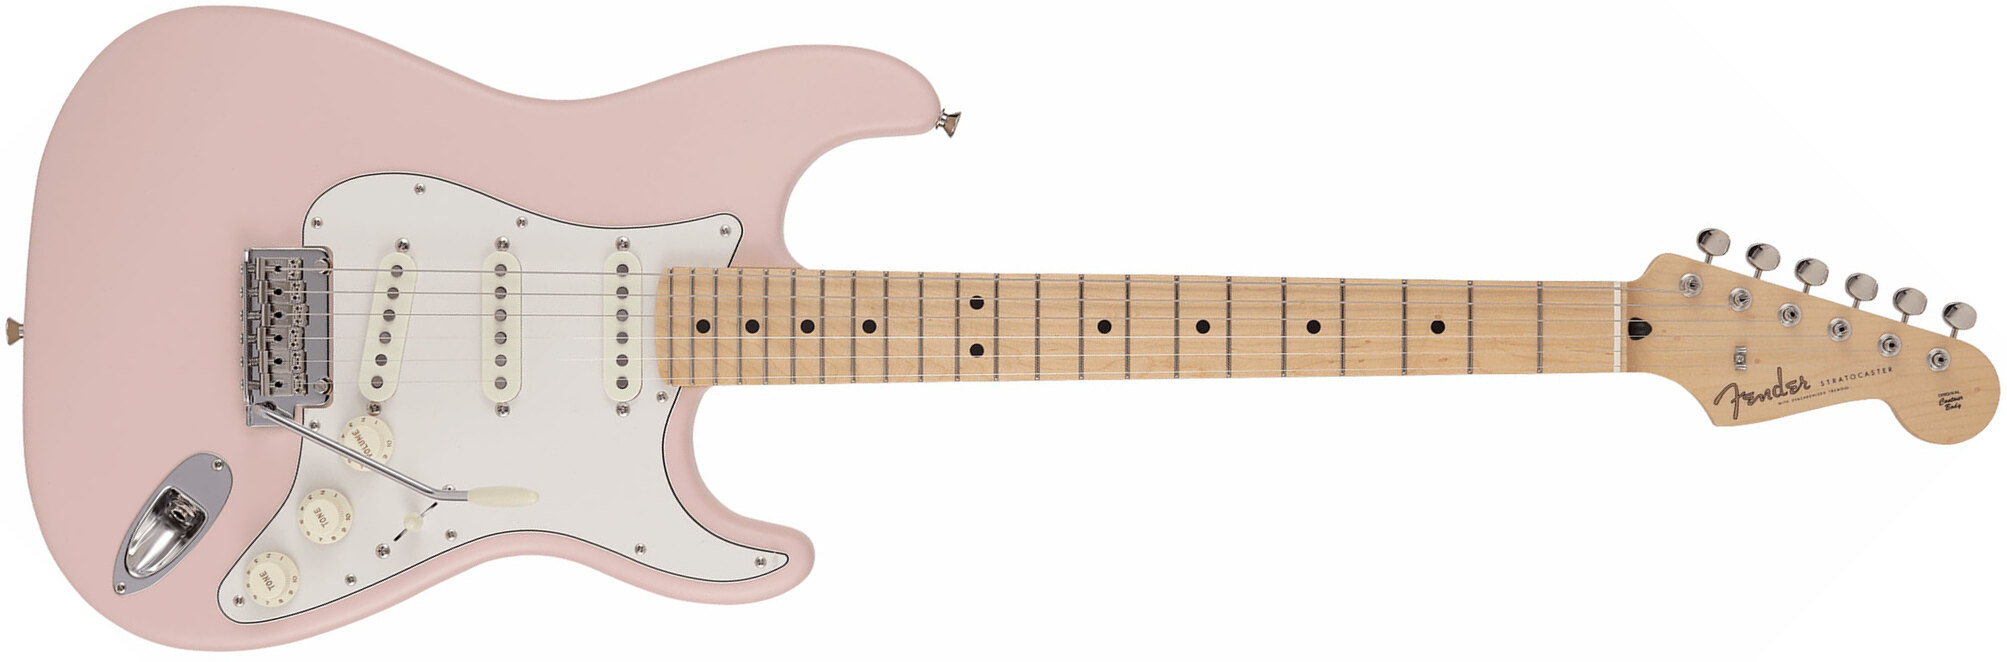 Fender Strat Junior Mij Jap 3s Trem Rw - Satin Shell Pink - E-Gitarre für Kinder - Main picture